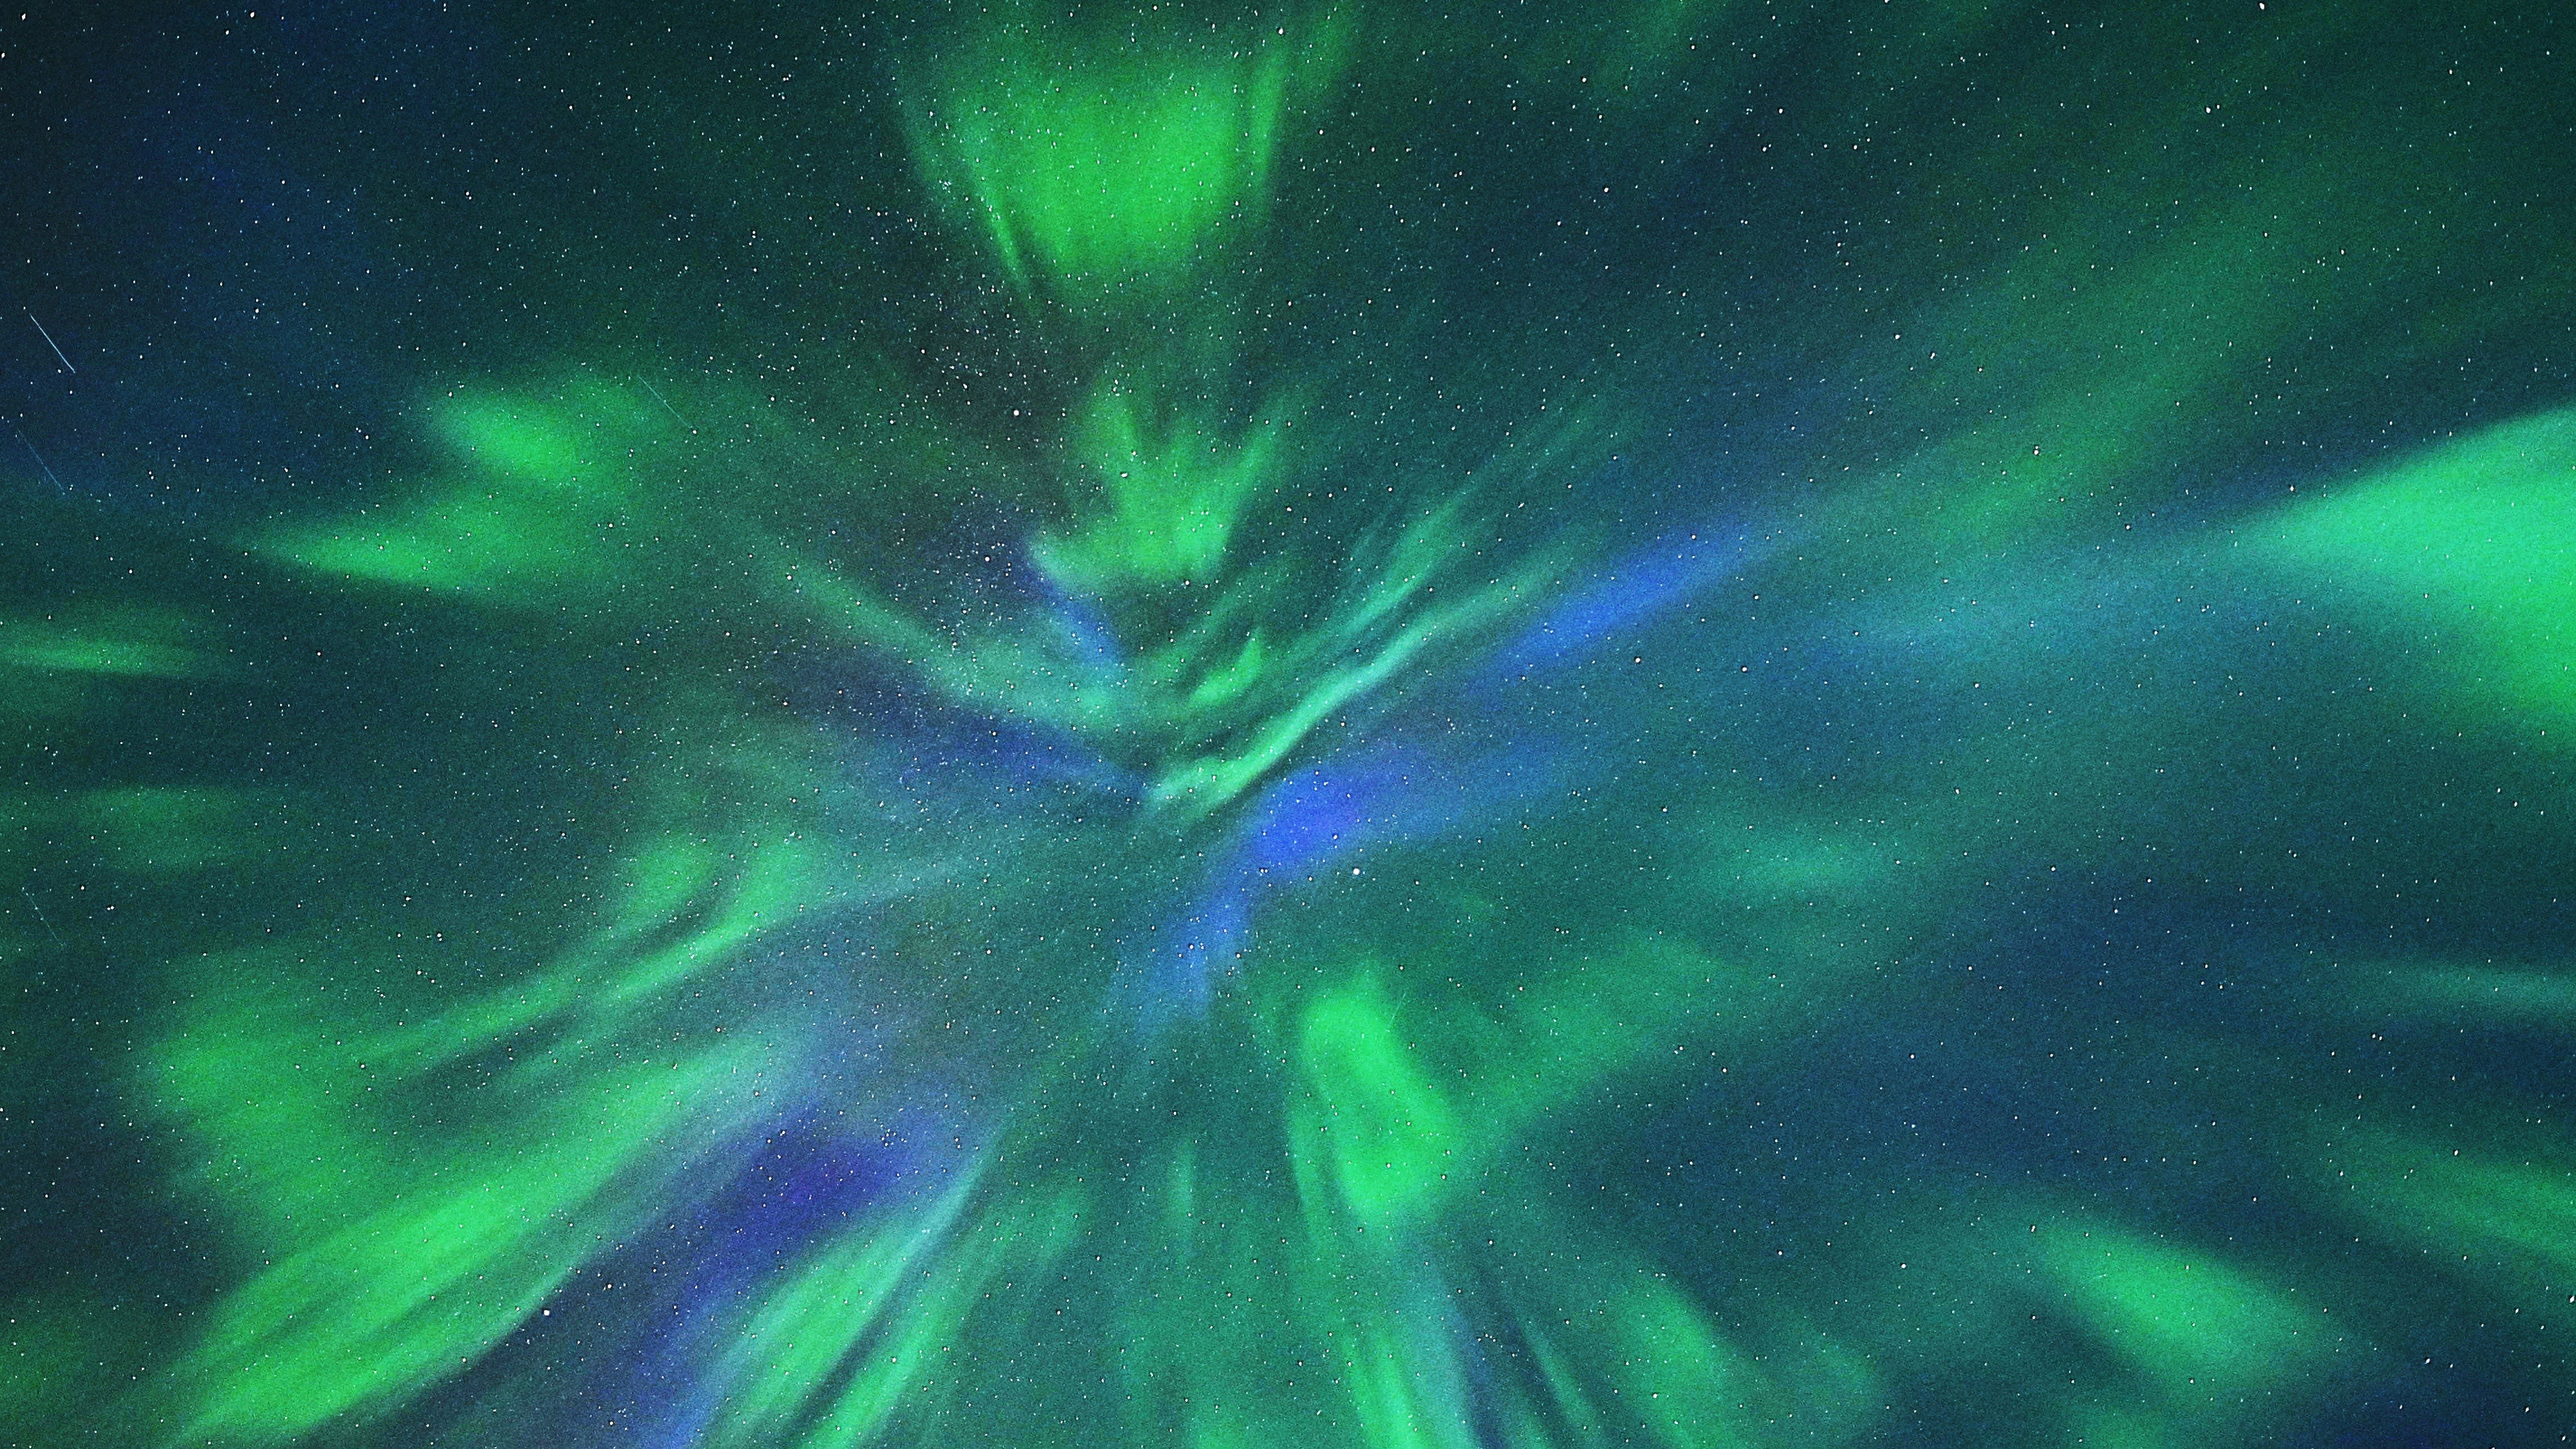  Solar storm slams into Earth and sparks stunning northern lights display (photos) 